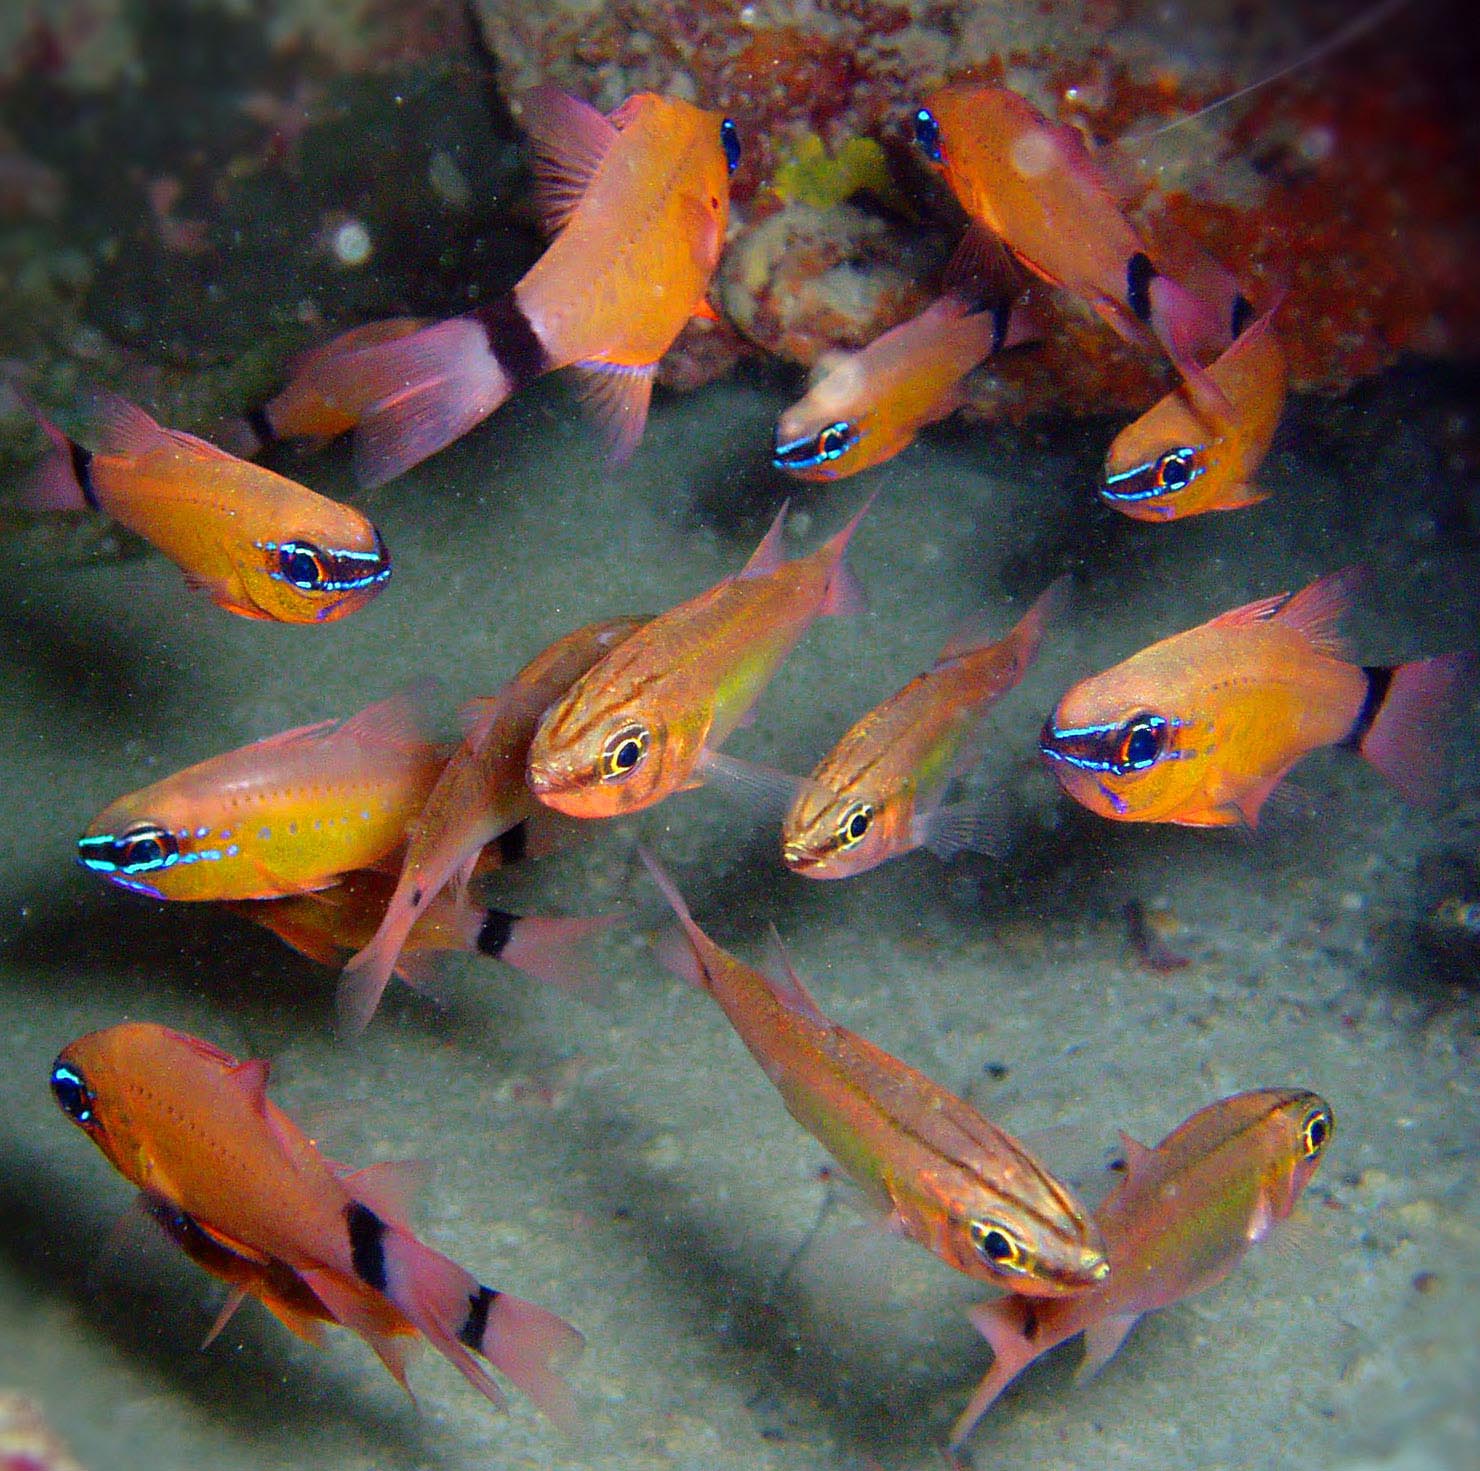 Ring-tail_Cardinalfish,_Apogon_aureus.jpg